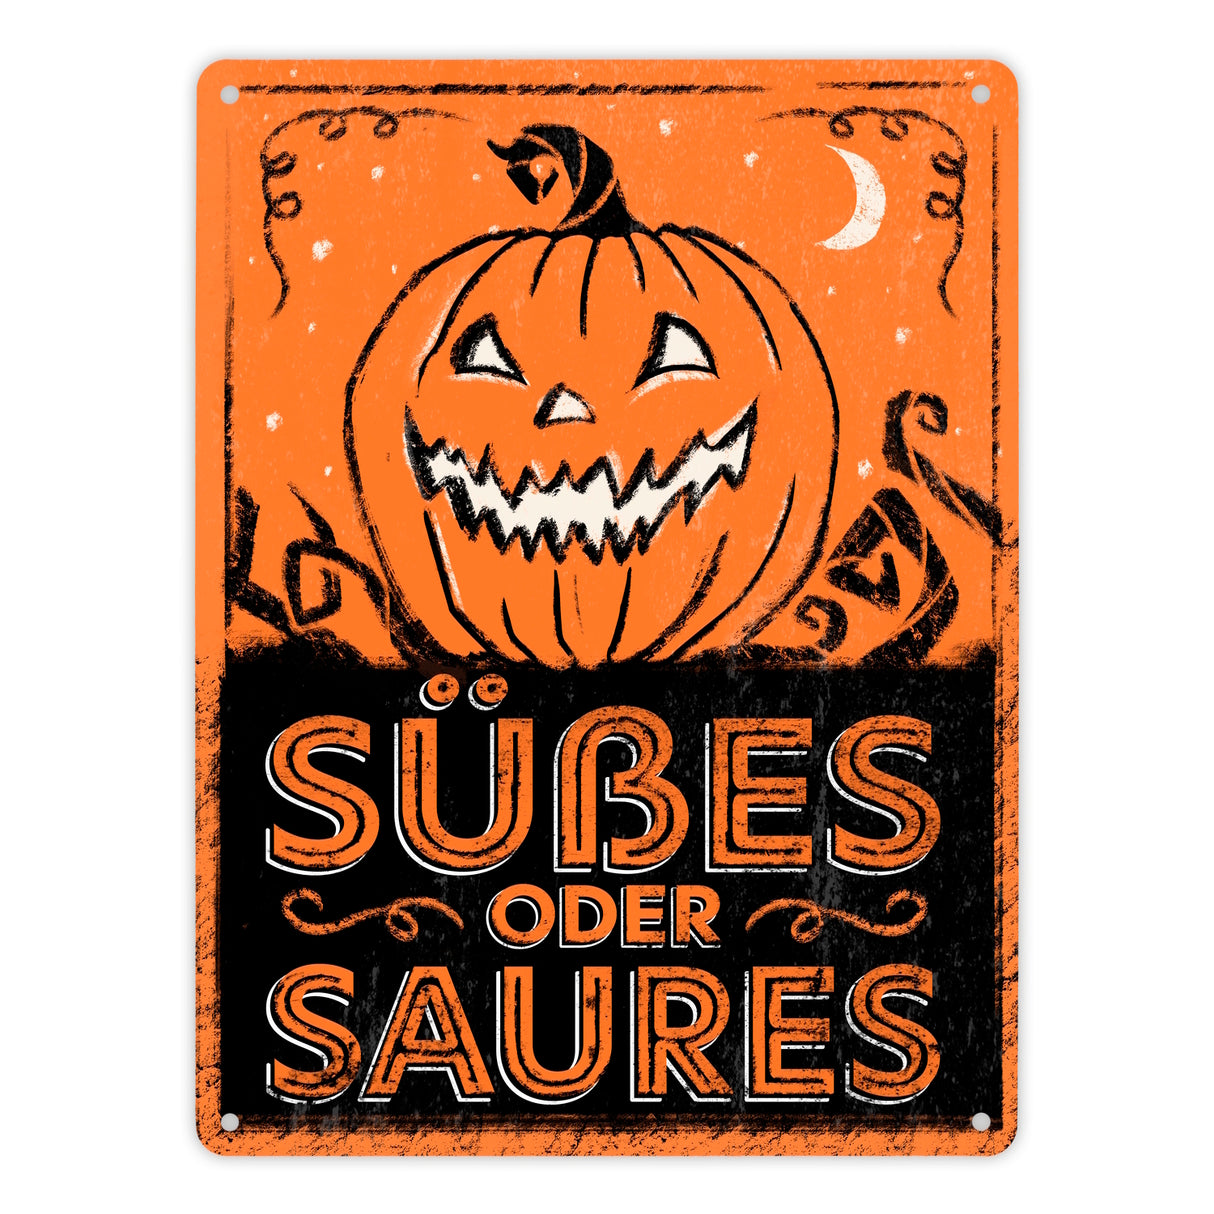 Metallschild mit Halloween Kürbis Motiv im used Look - Süßes oder Saures